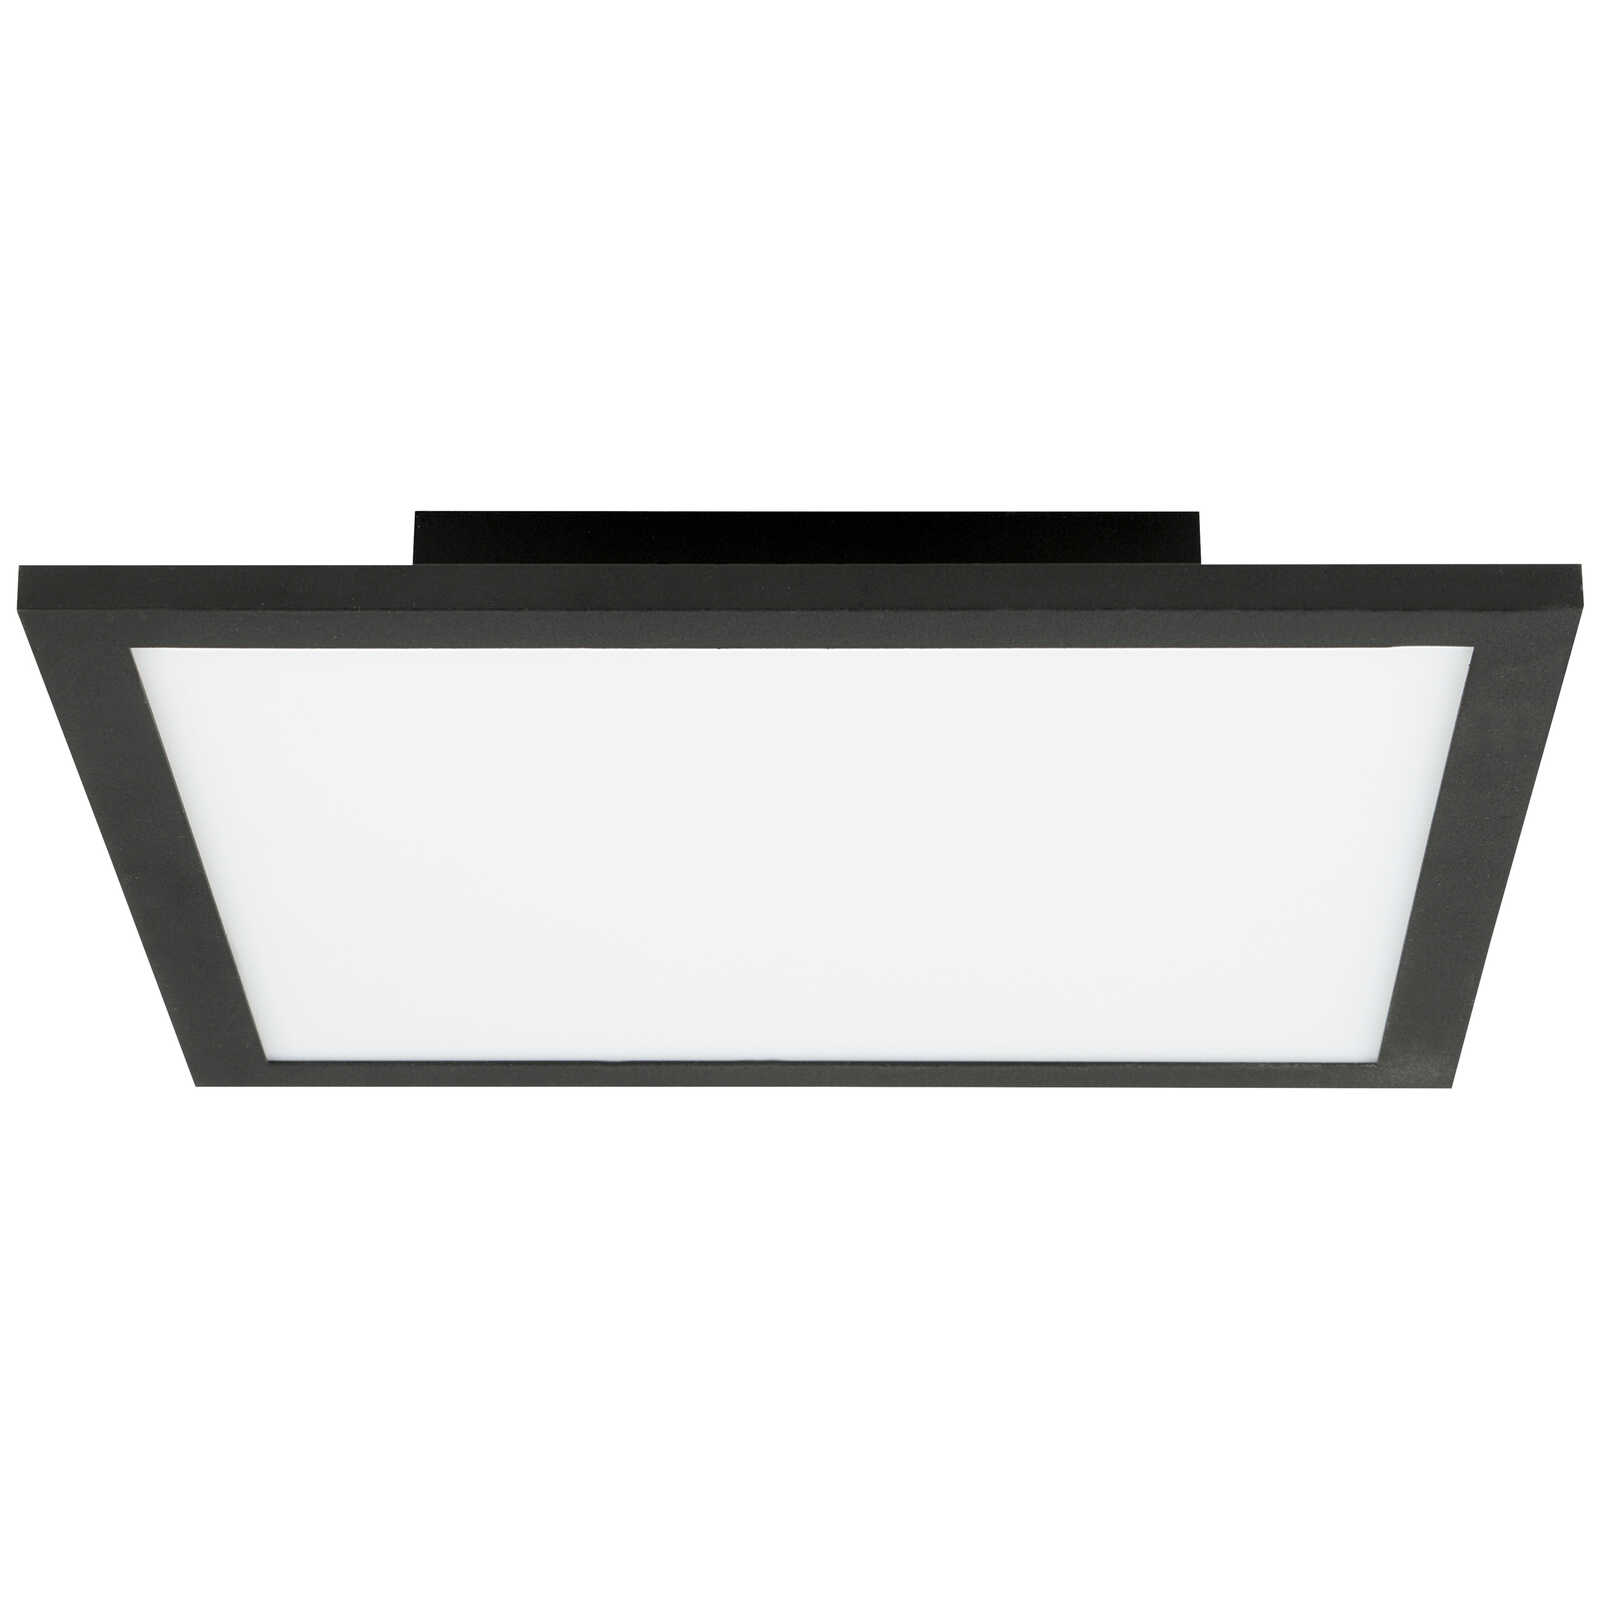             Metal surface-mounted panel - Constantin 15 - Black
        